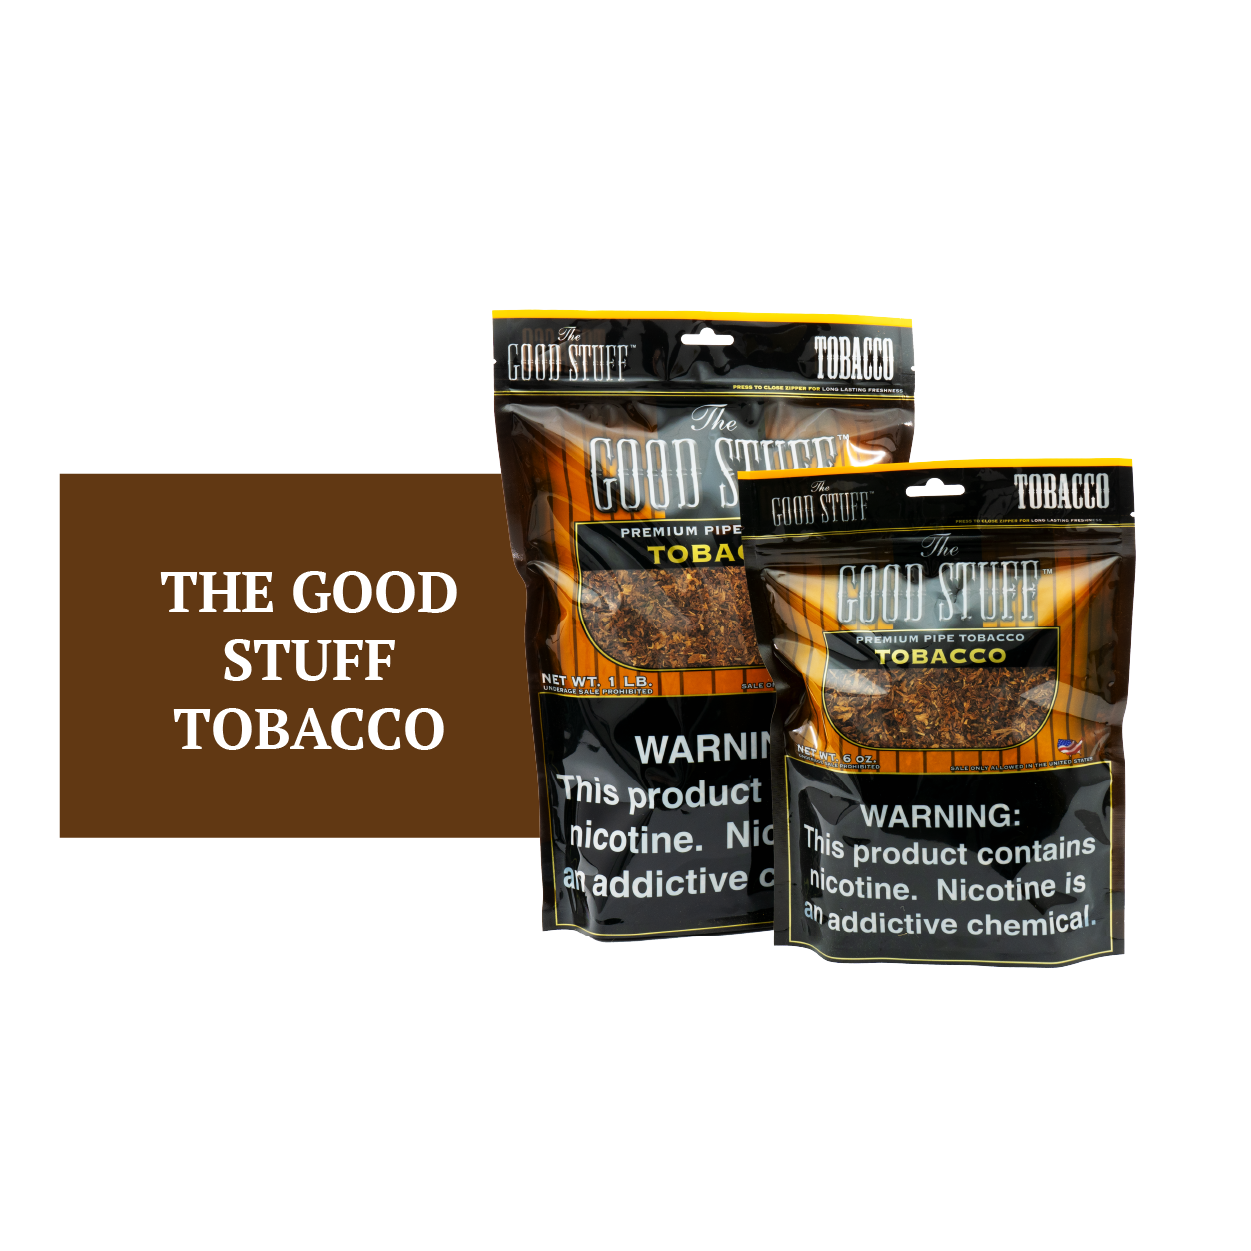 The Good Stuff tobacco flavor bags.